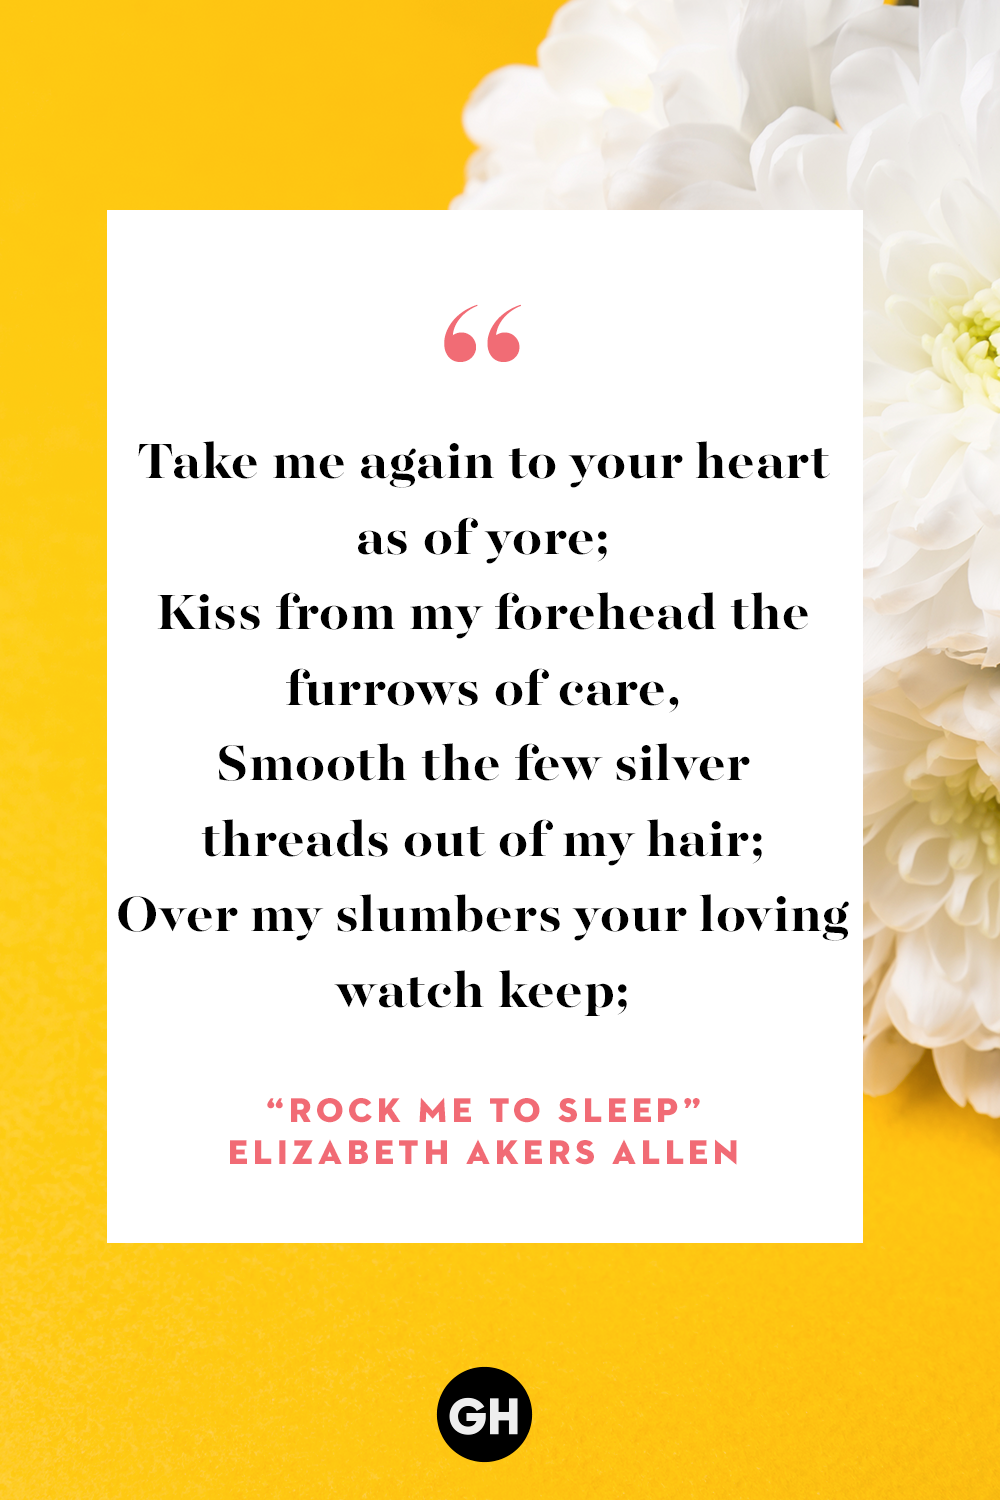 Poem mother valentines day Valentine Poems: